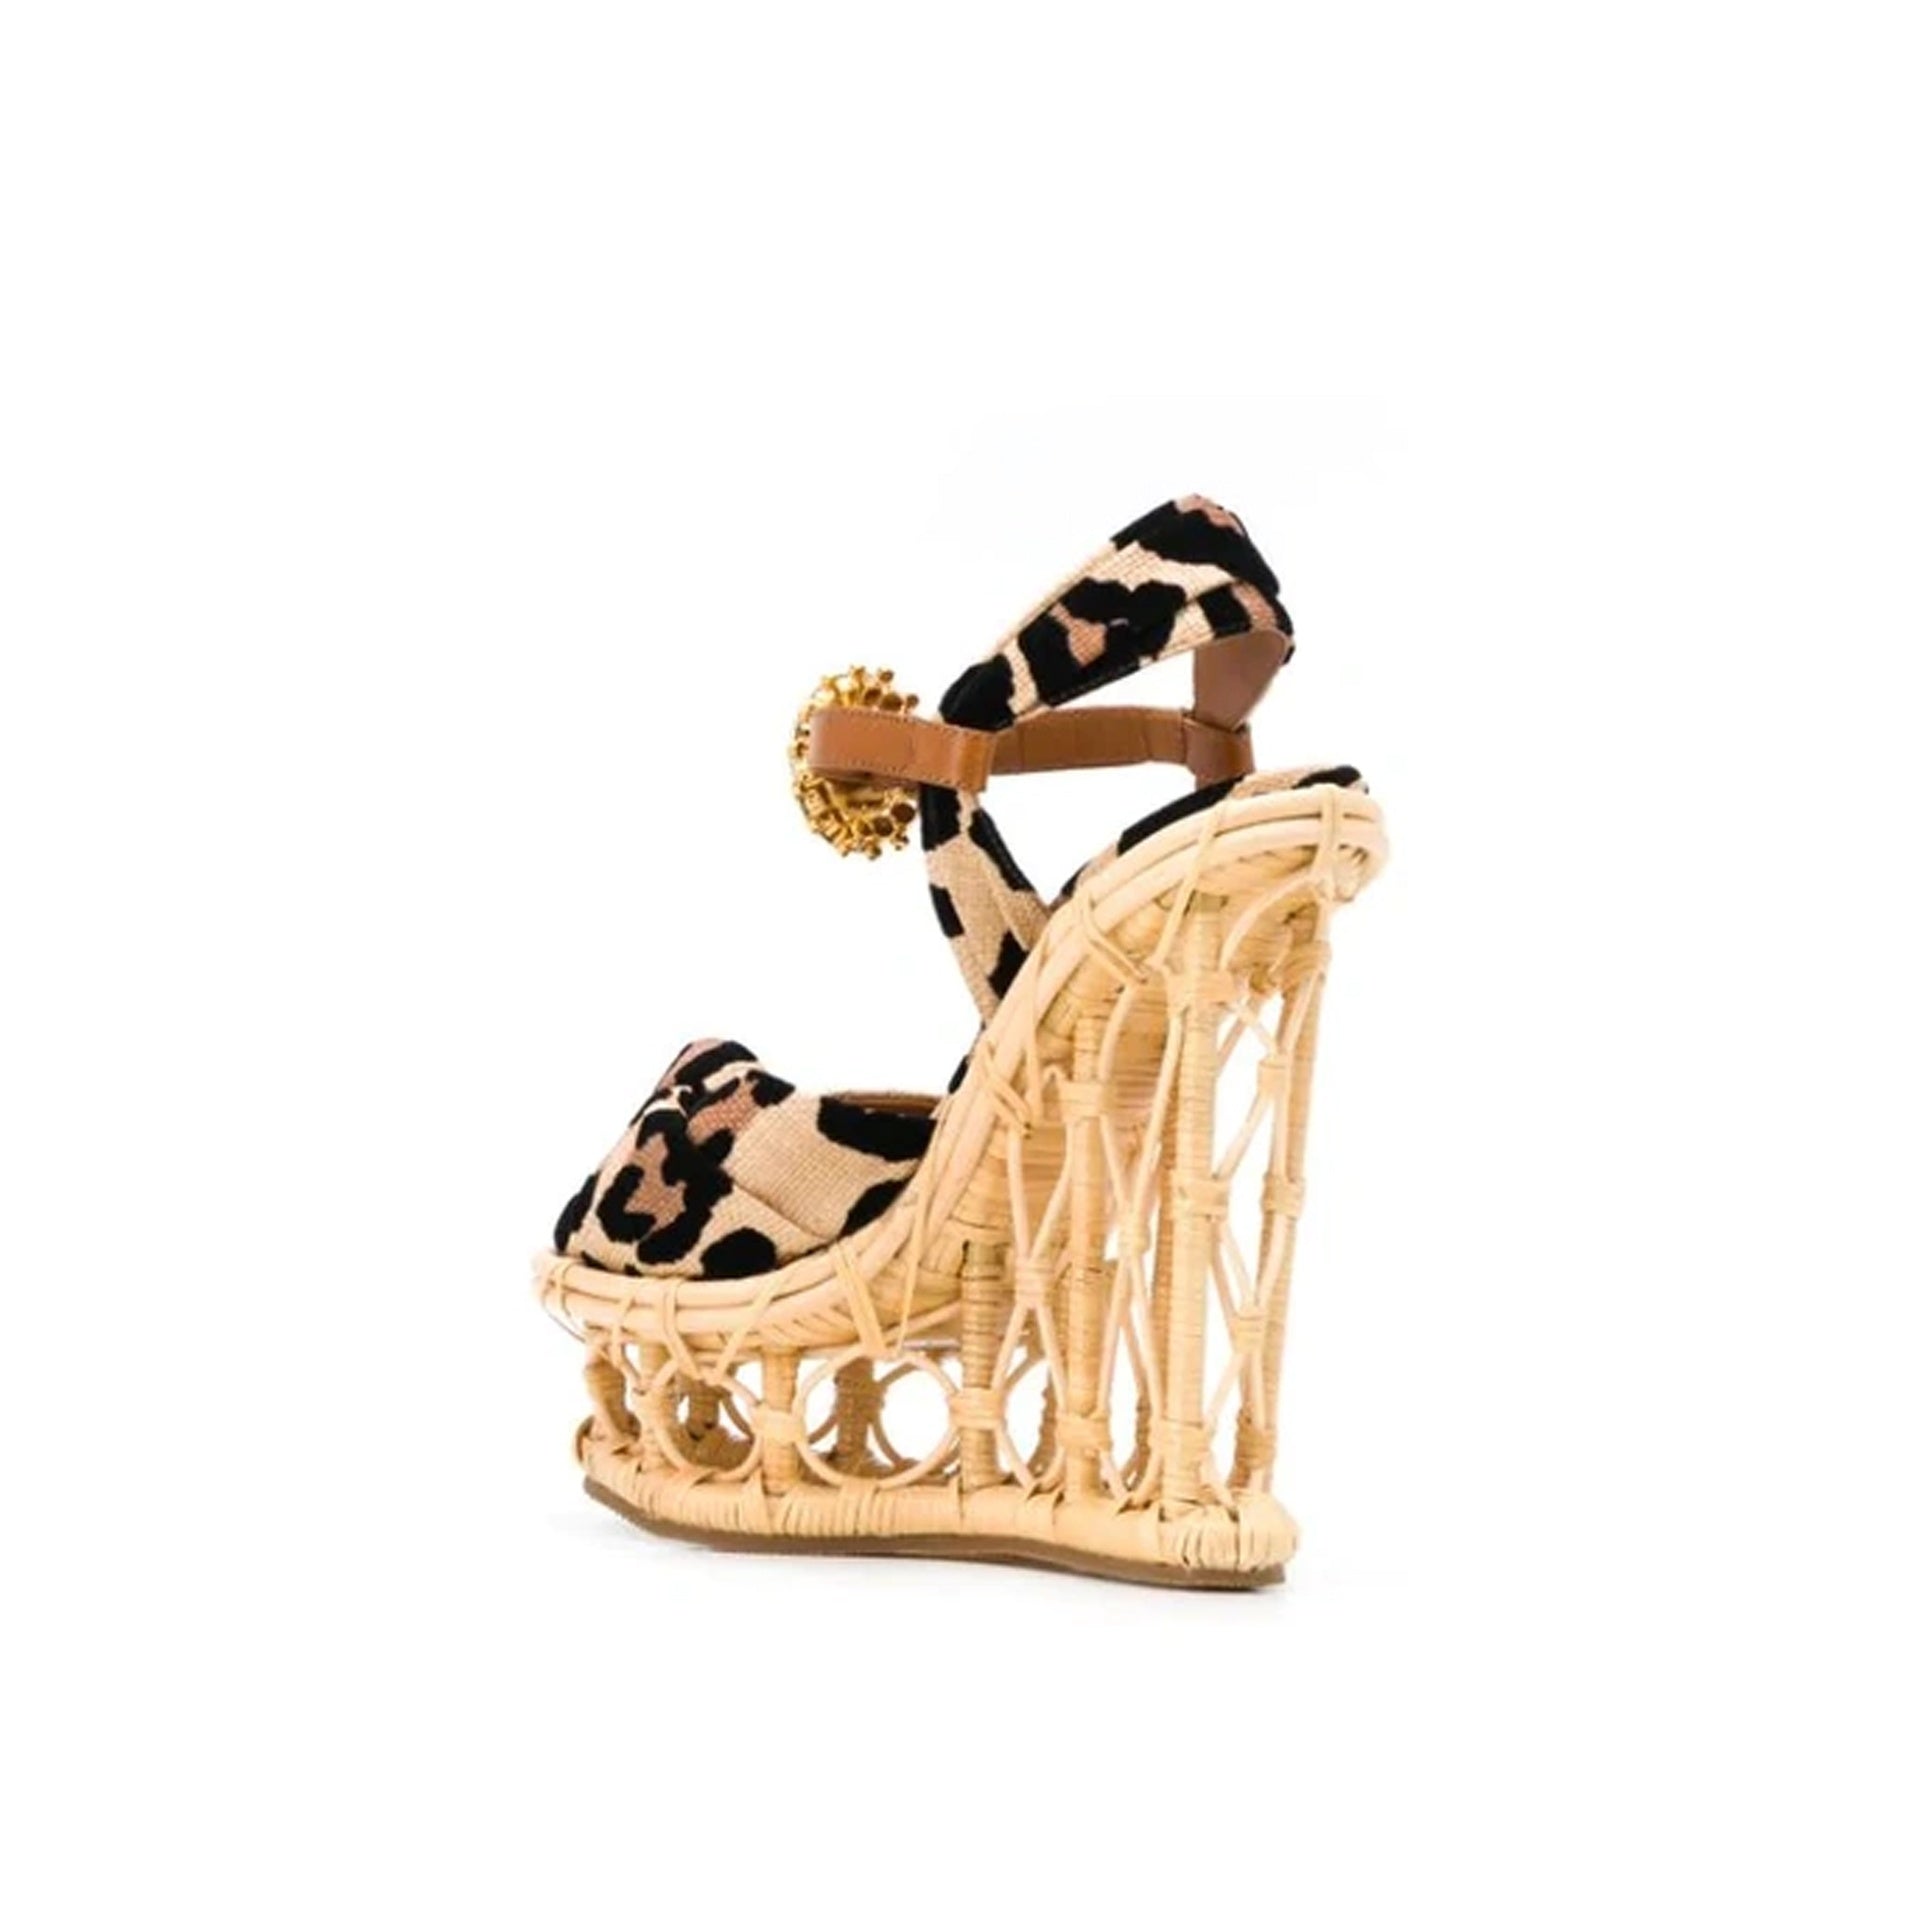 DOLCE-GABBANA-OUTLET-SALE-Dolce-Gabbana-Wedge-Sandals-Sandalen-ARCHIVE-COLLECTION-3.jpg